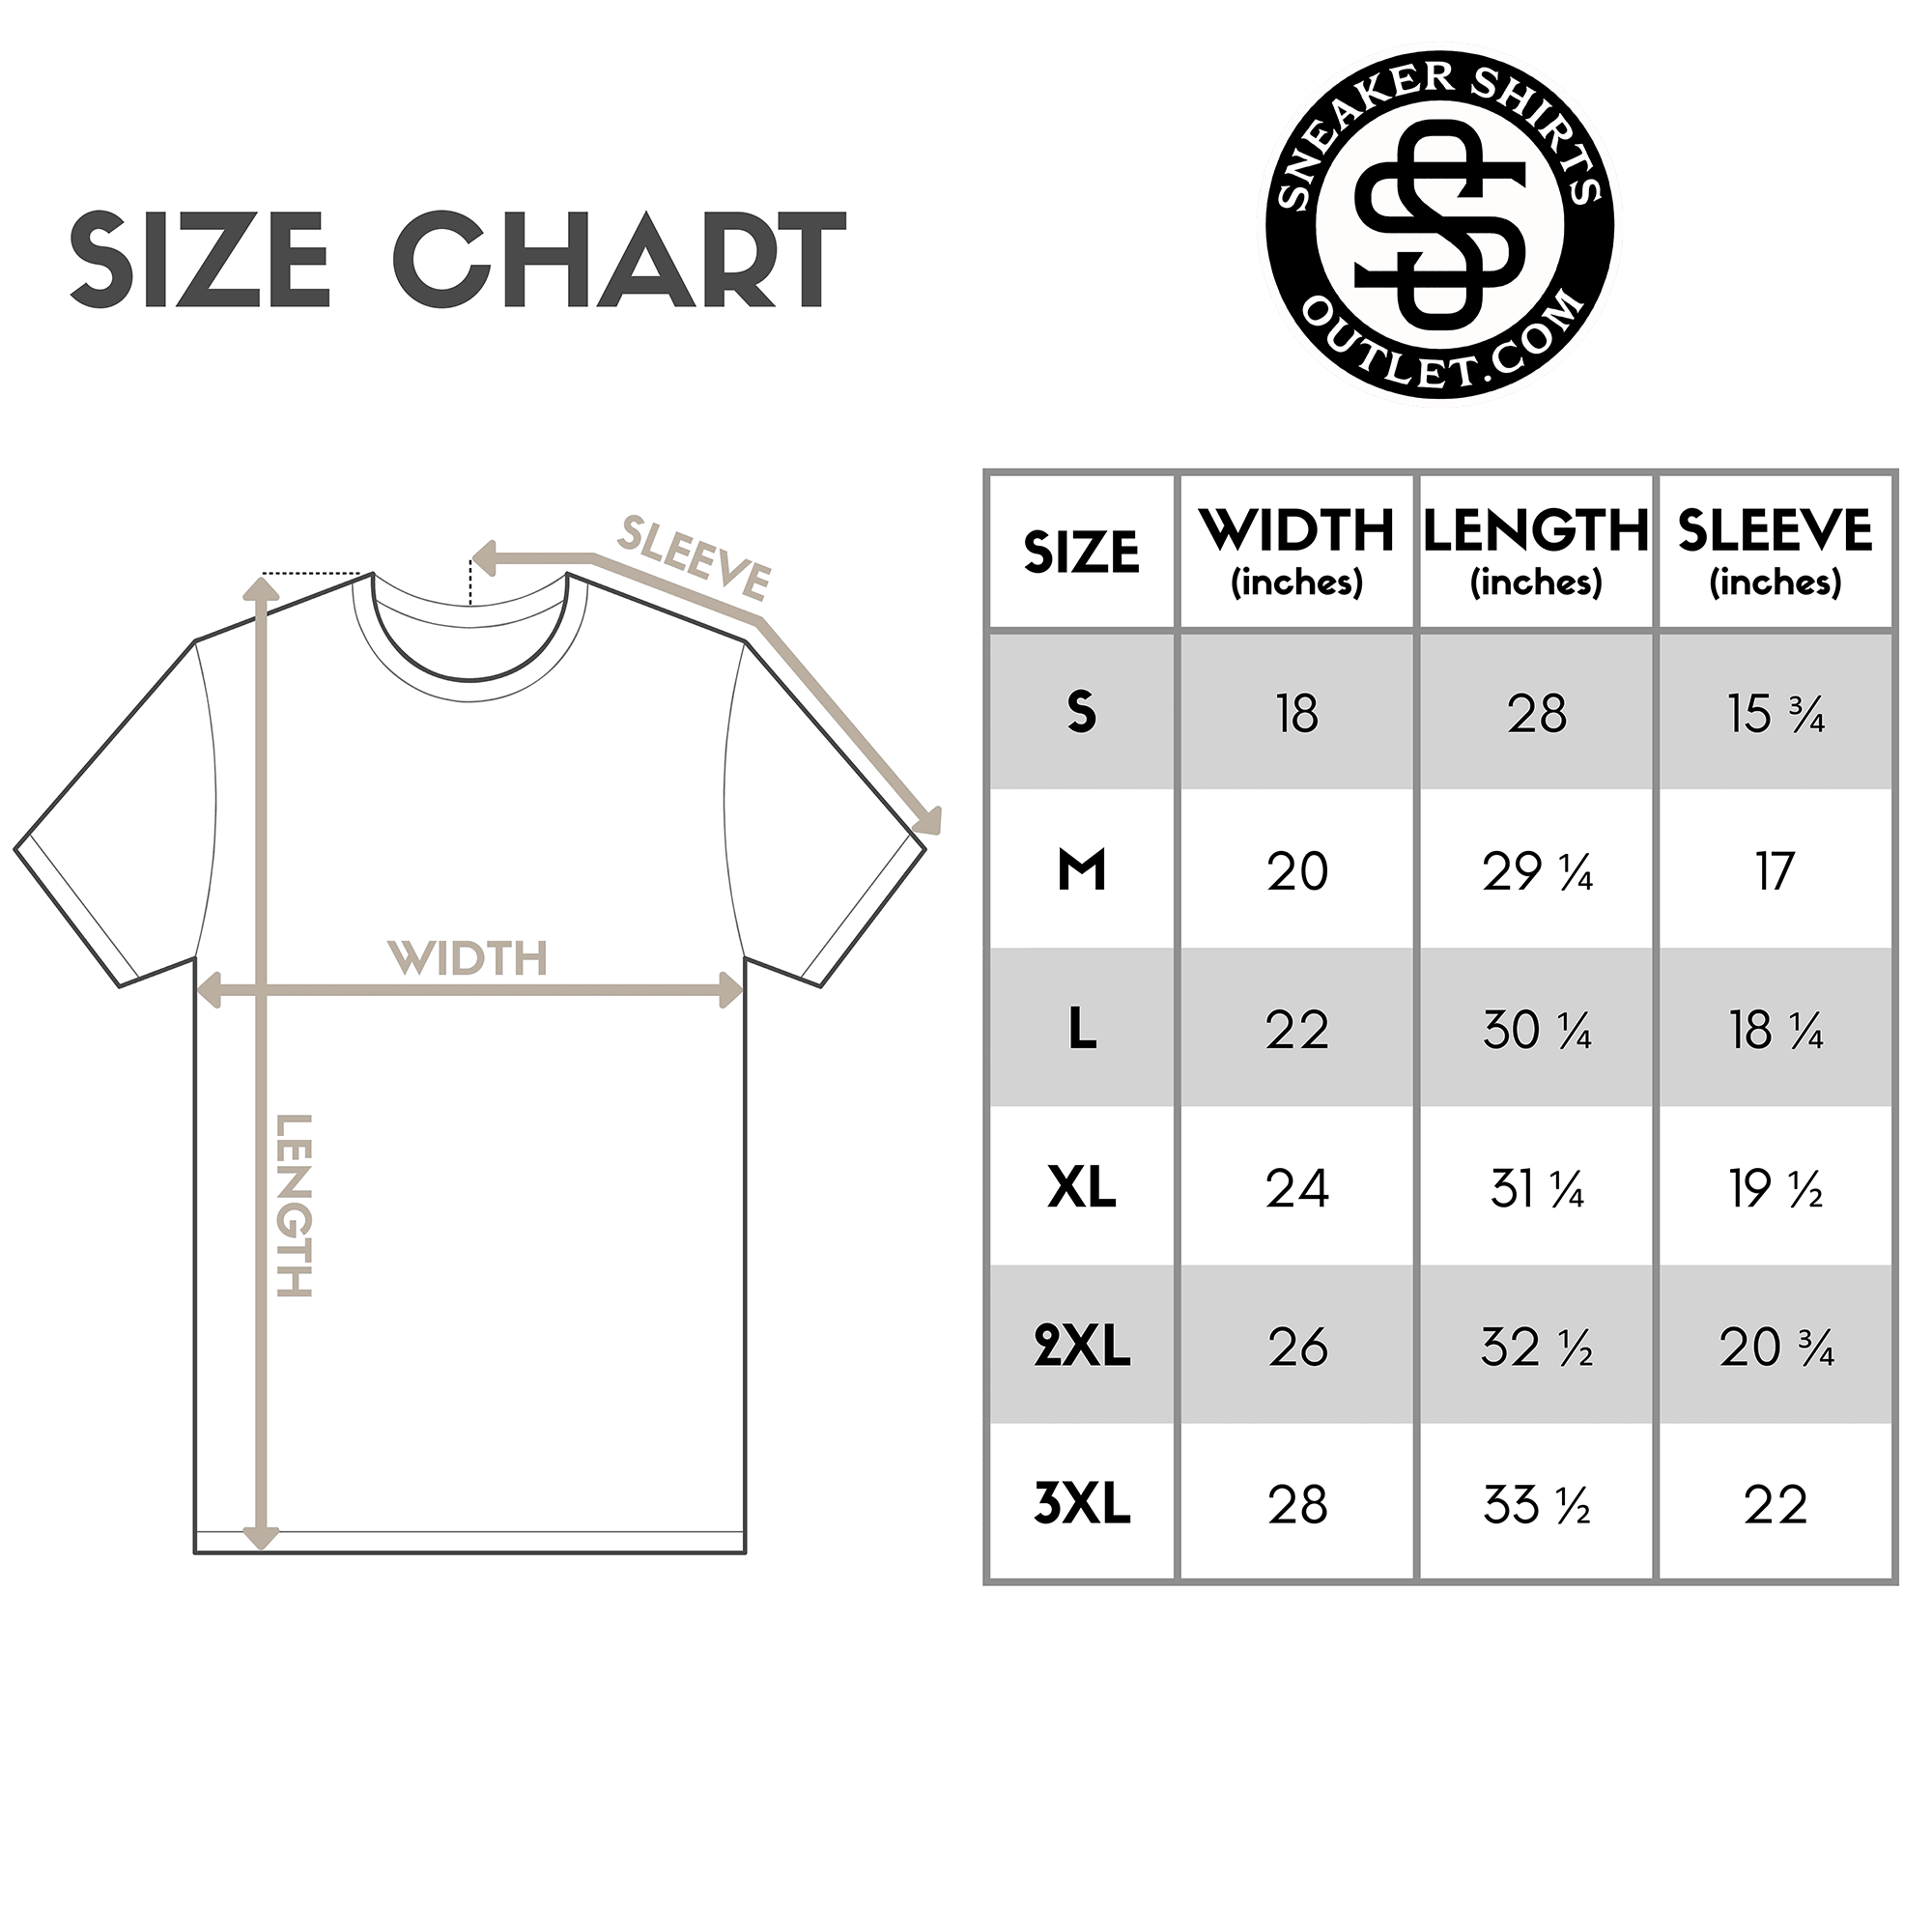 Money Talk Bear Shirt size chart photo